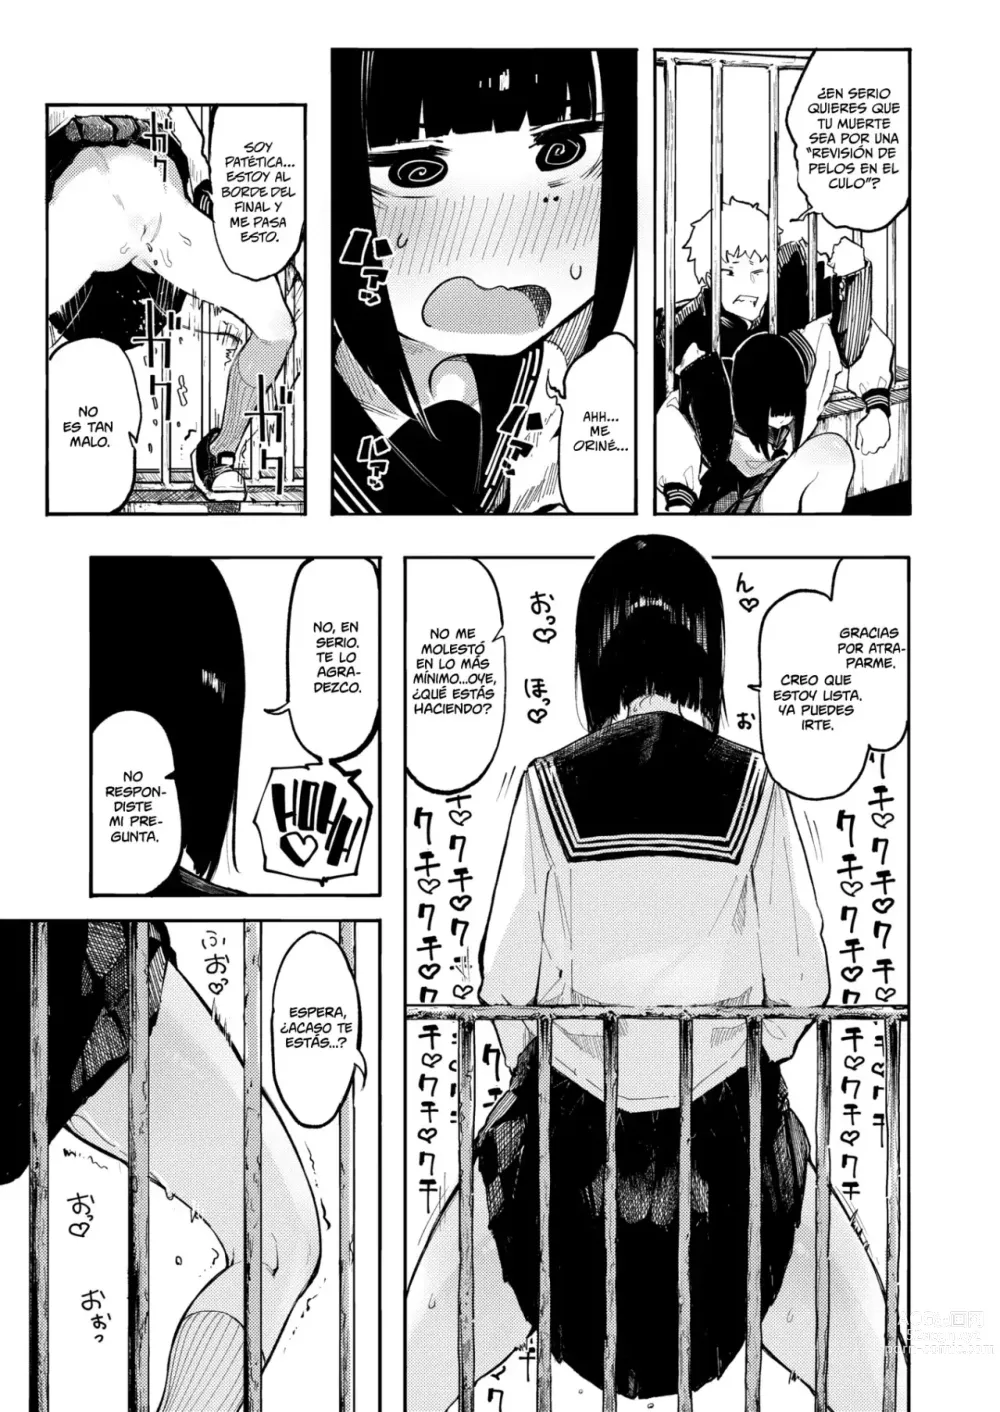 Page 9 of doujinshi Chica Suicida